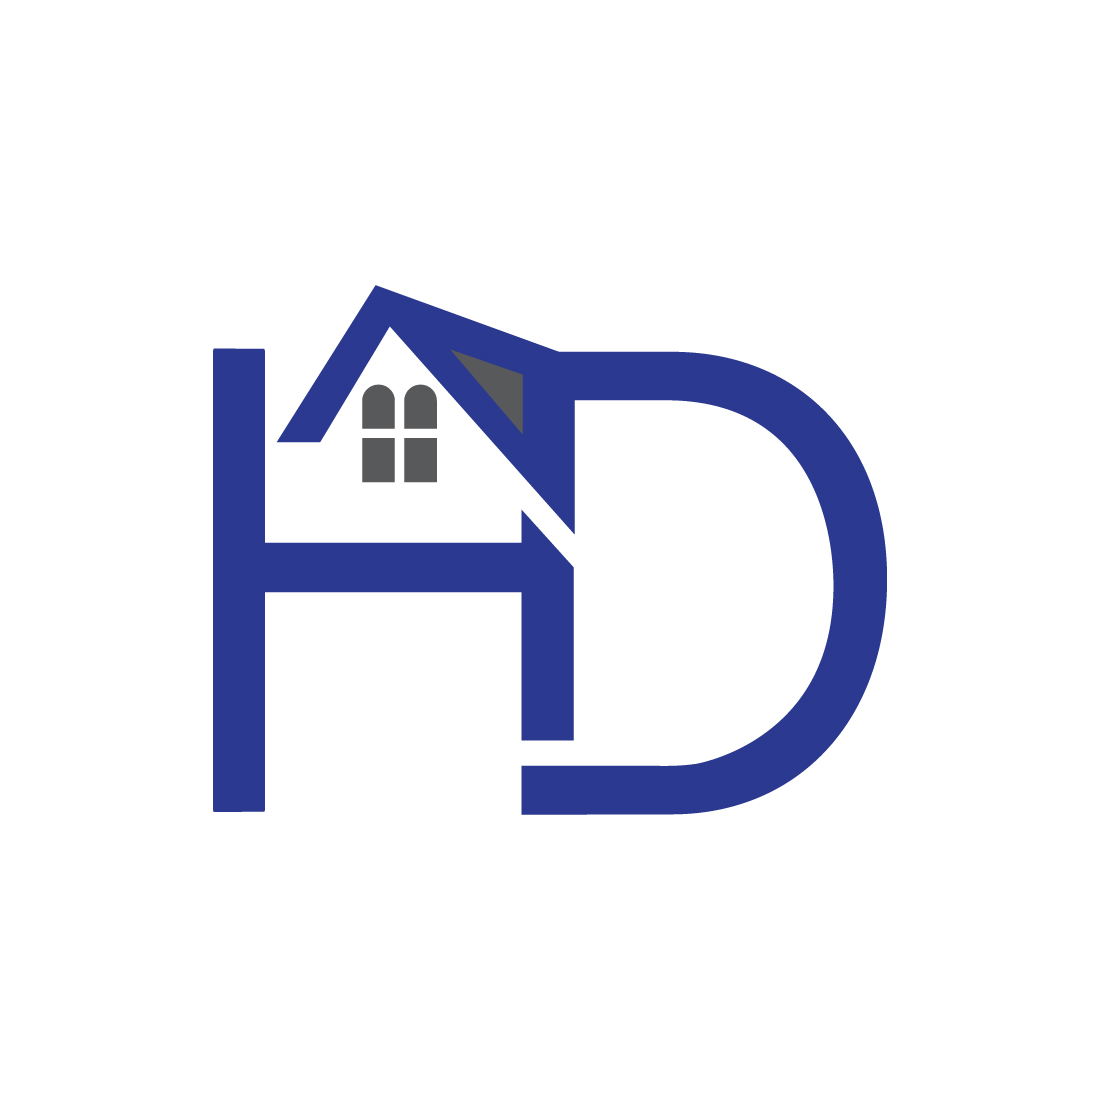 Luxury hone HD letters logo design vector images DH logo design blue and black color best identity HD Real Estate logo template monogram, Business logo design preview image.